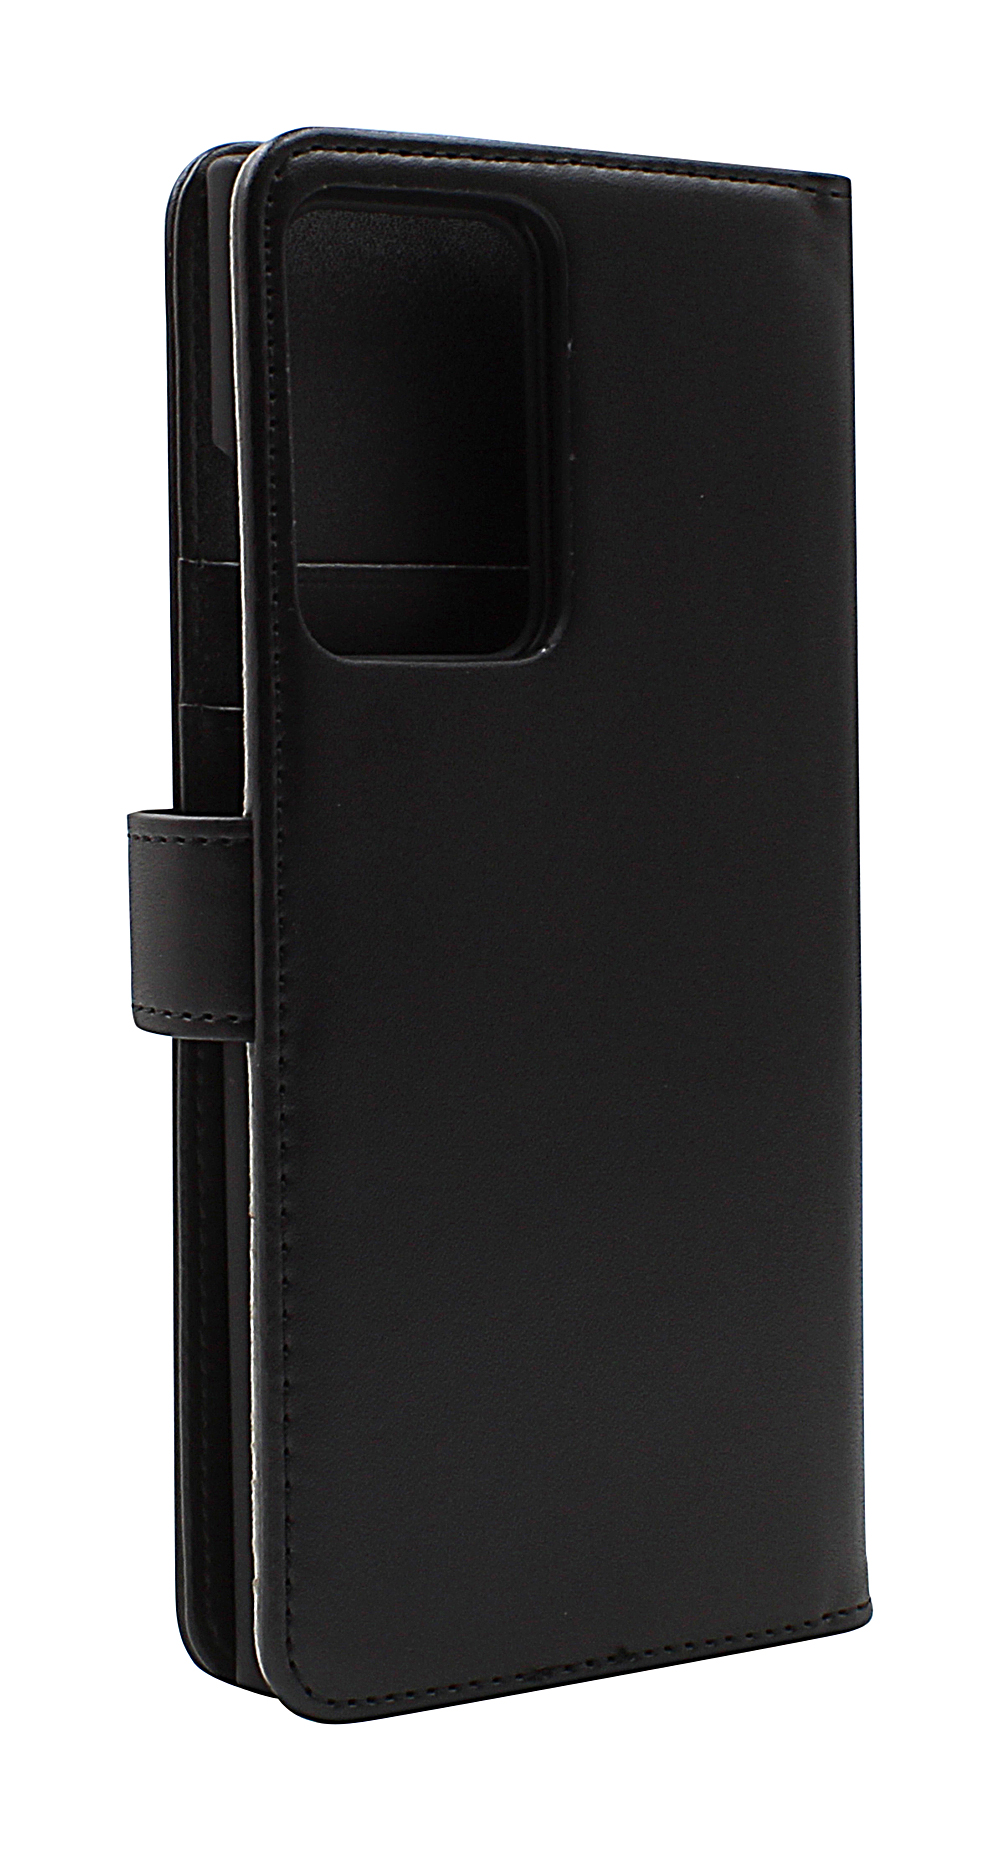 CoverIn Skimblocker Magneettikotelo Samsung Galaxy Note 20 Ultra